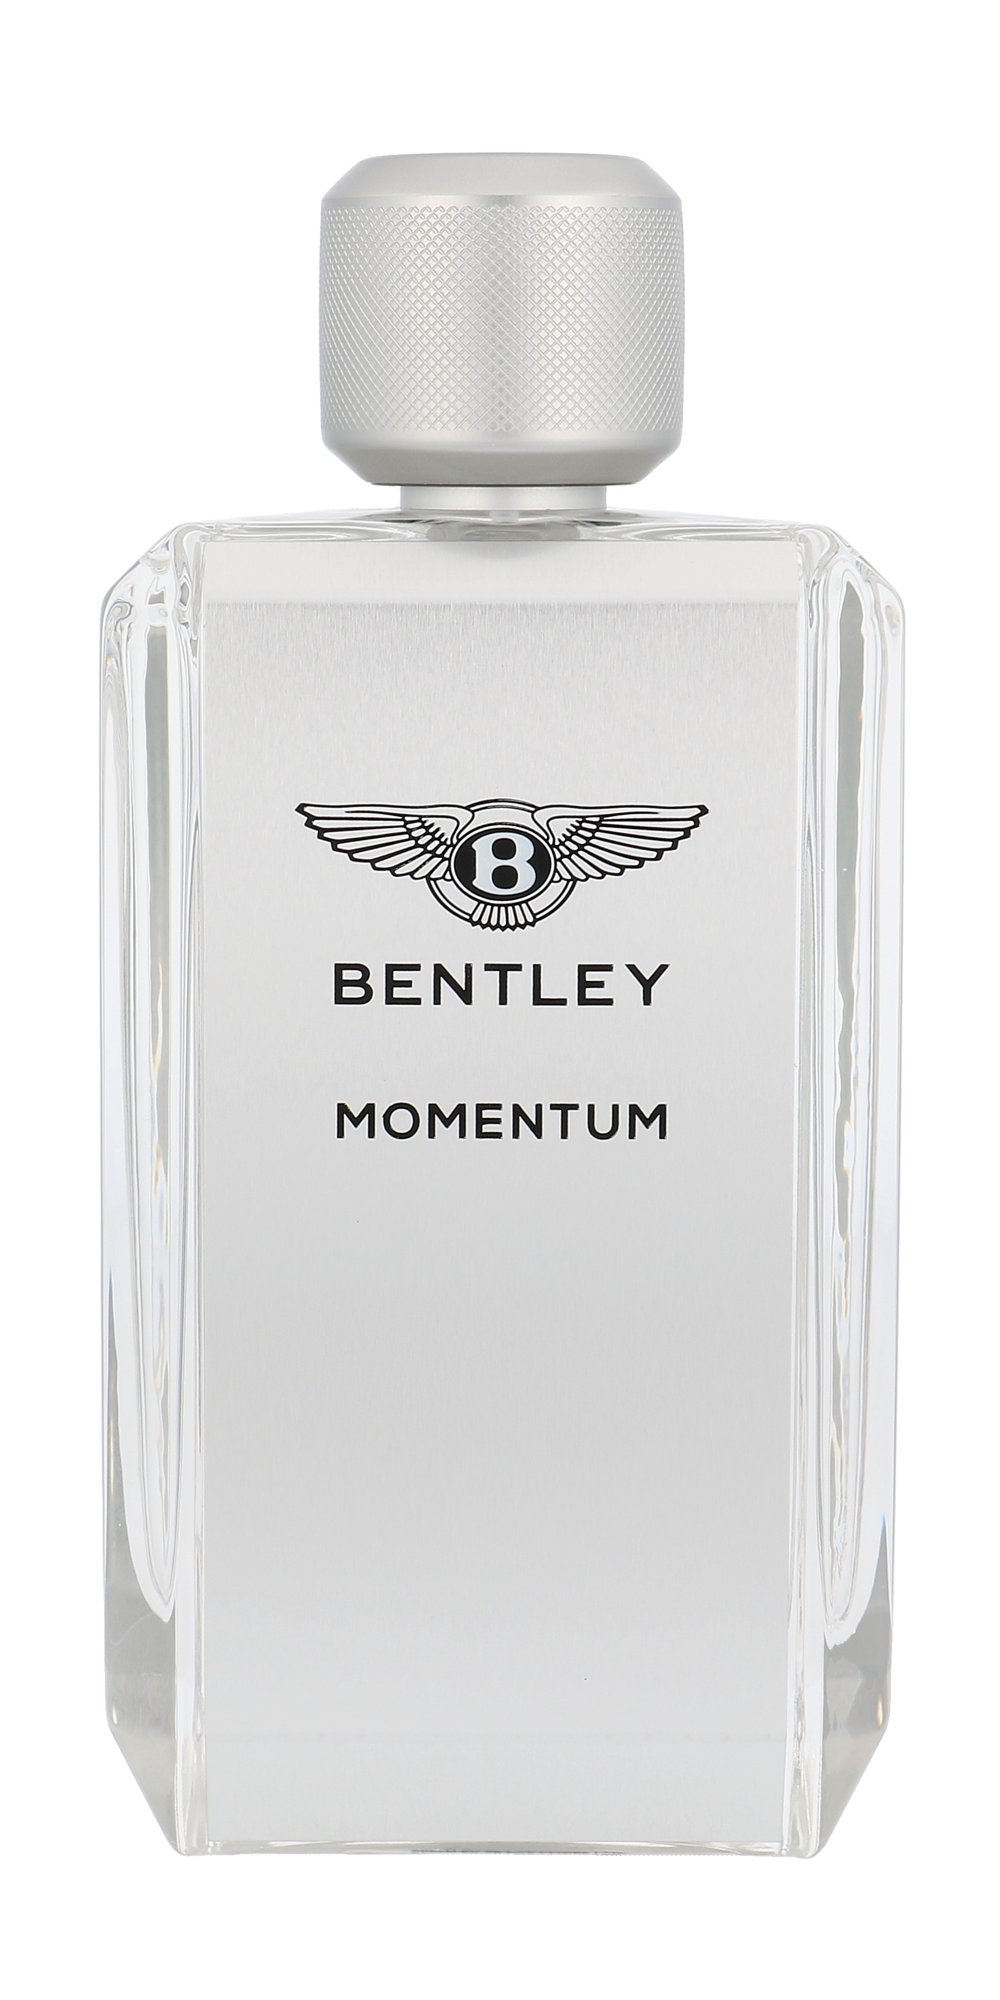 Bentley Momentum, Toaletní voda 100ml